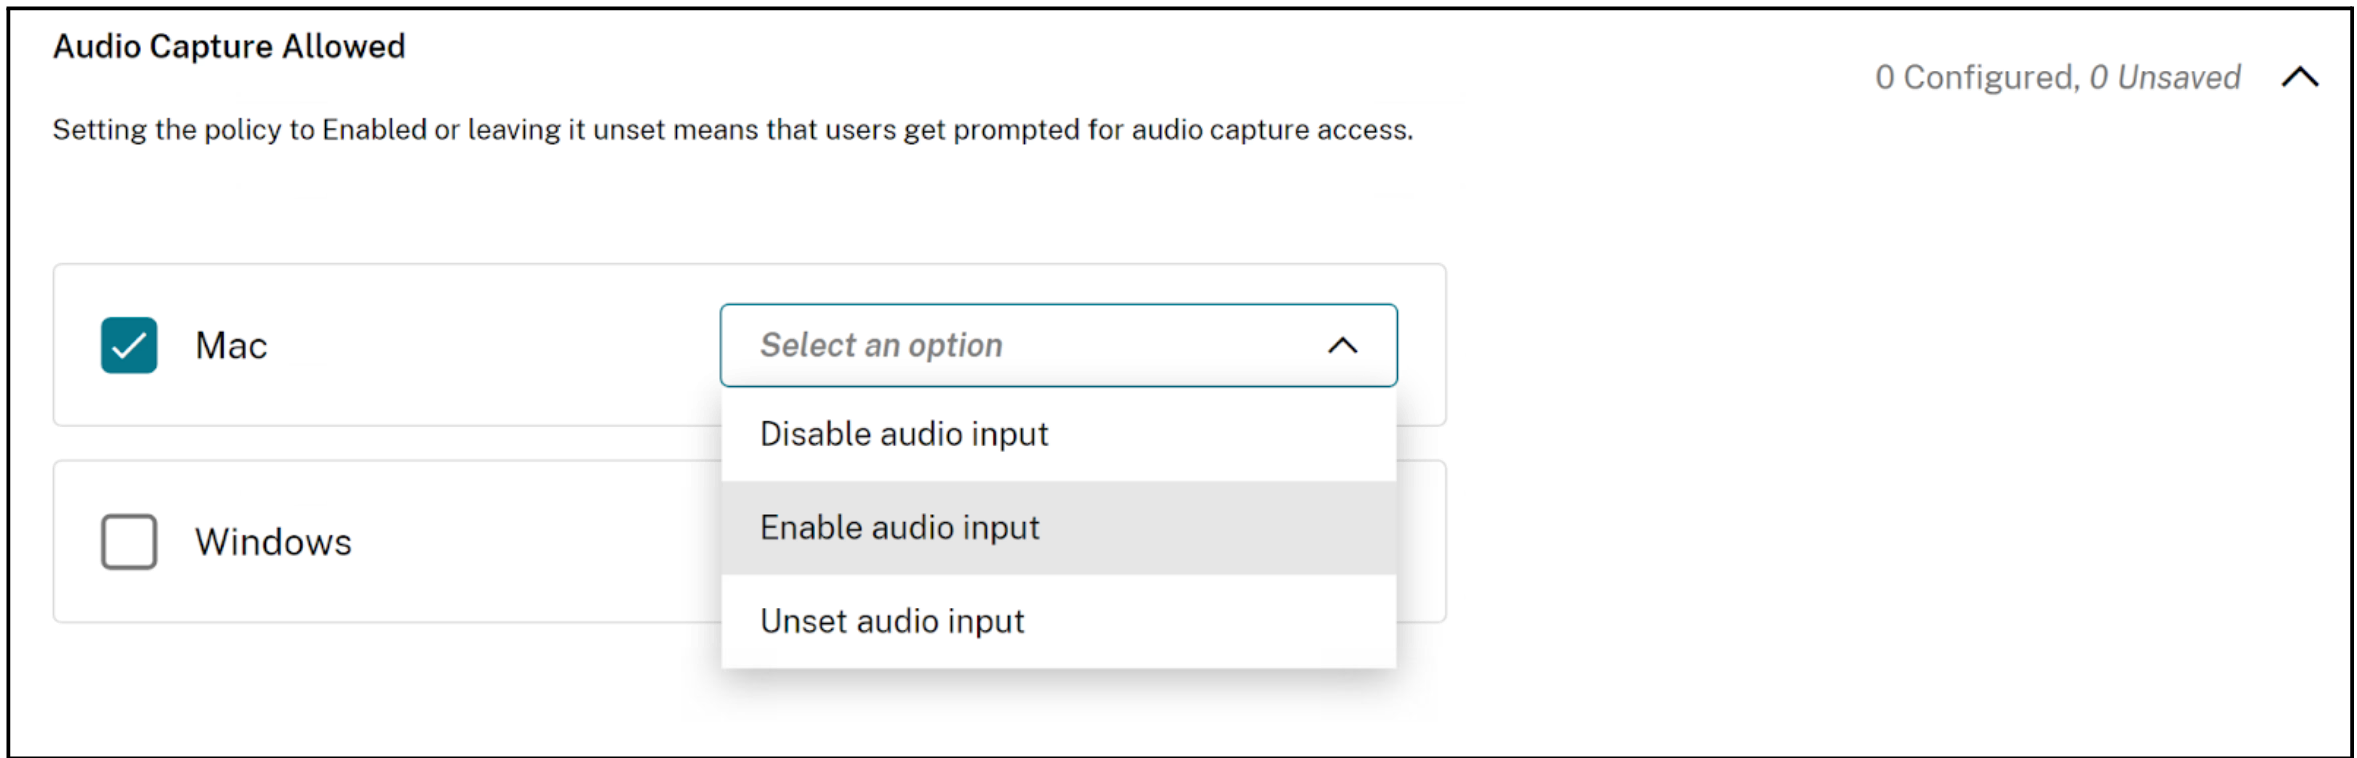 Audio capture allowed